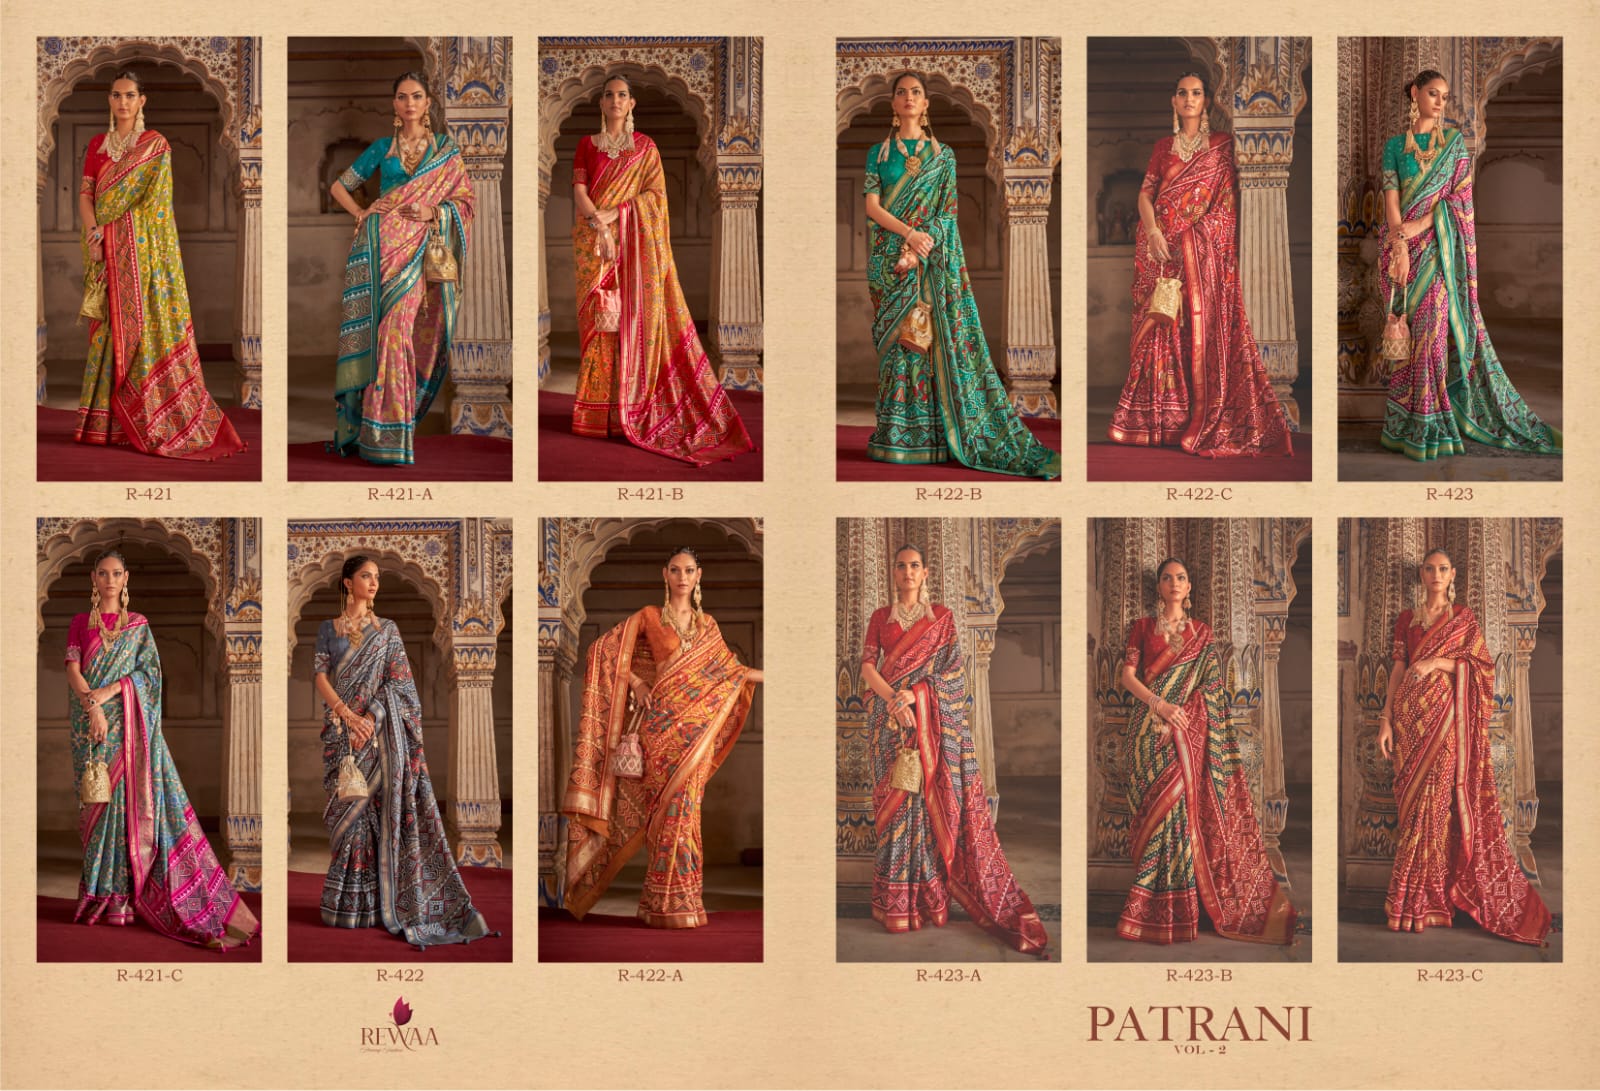 Rewaa Patrani 2 collection 7